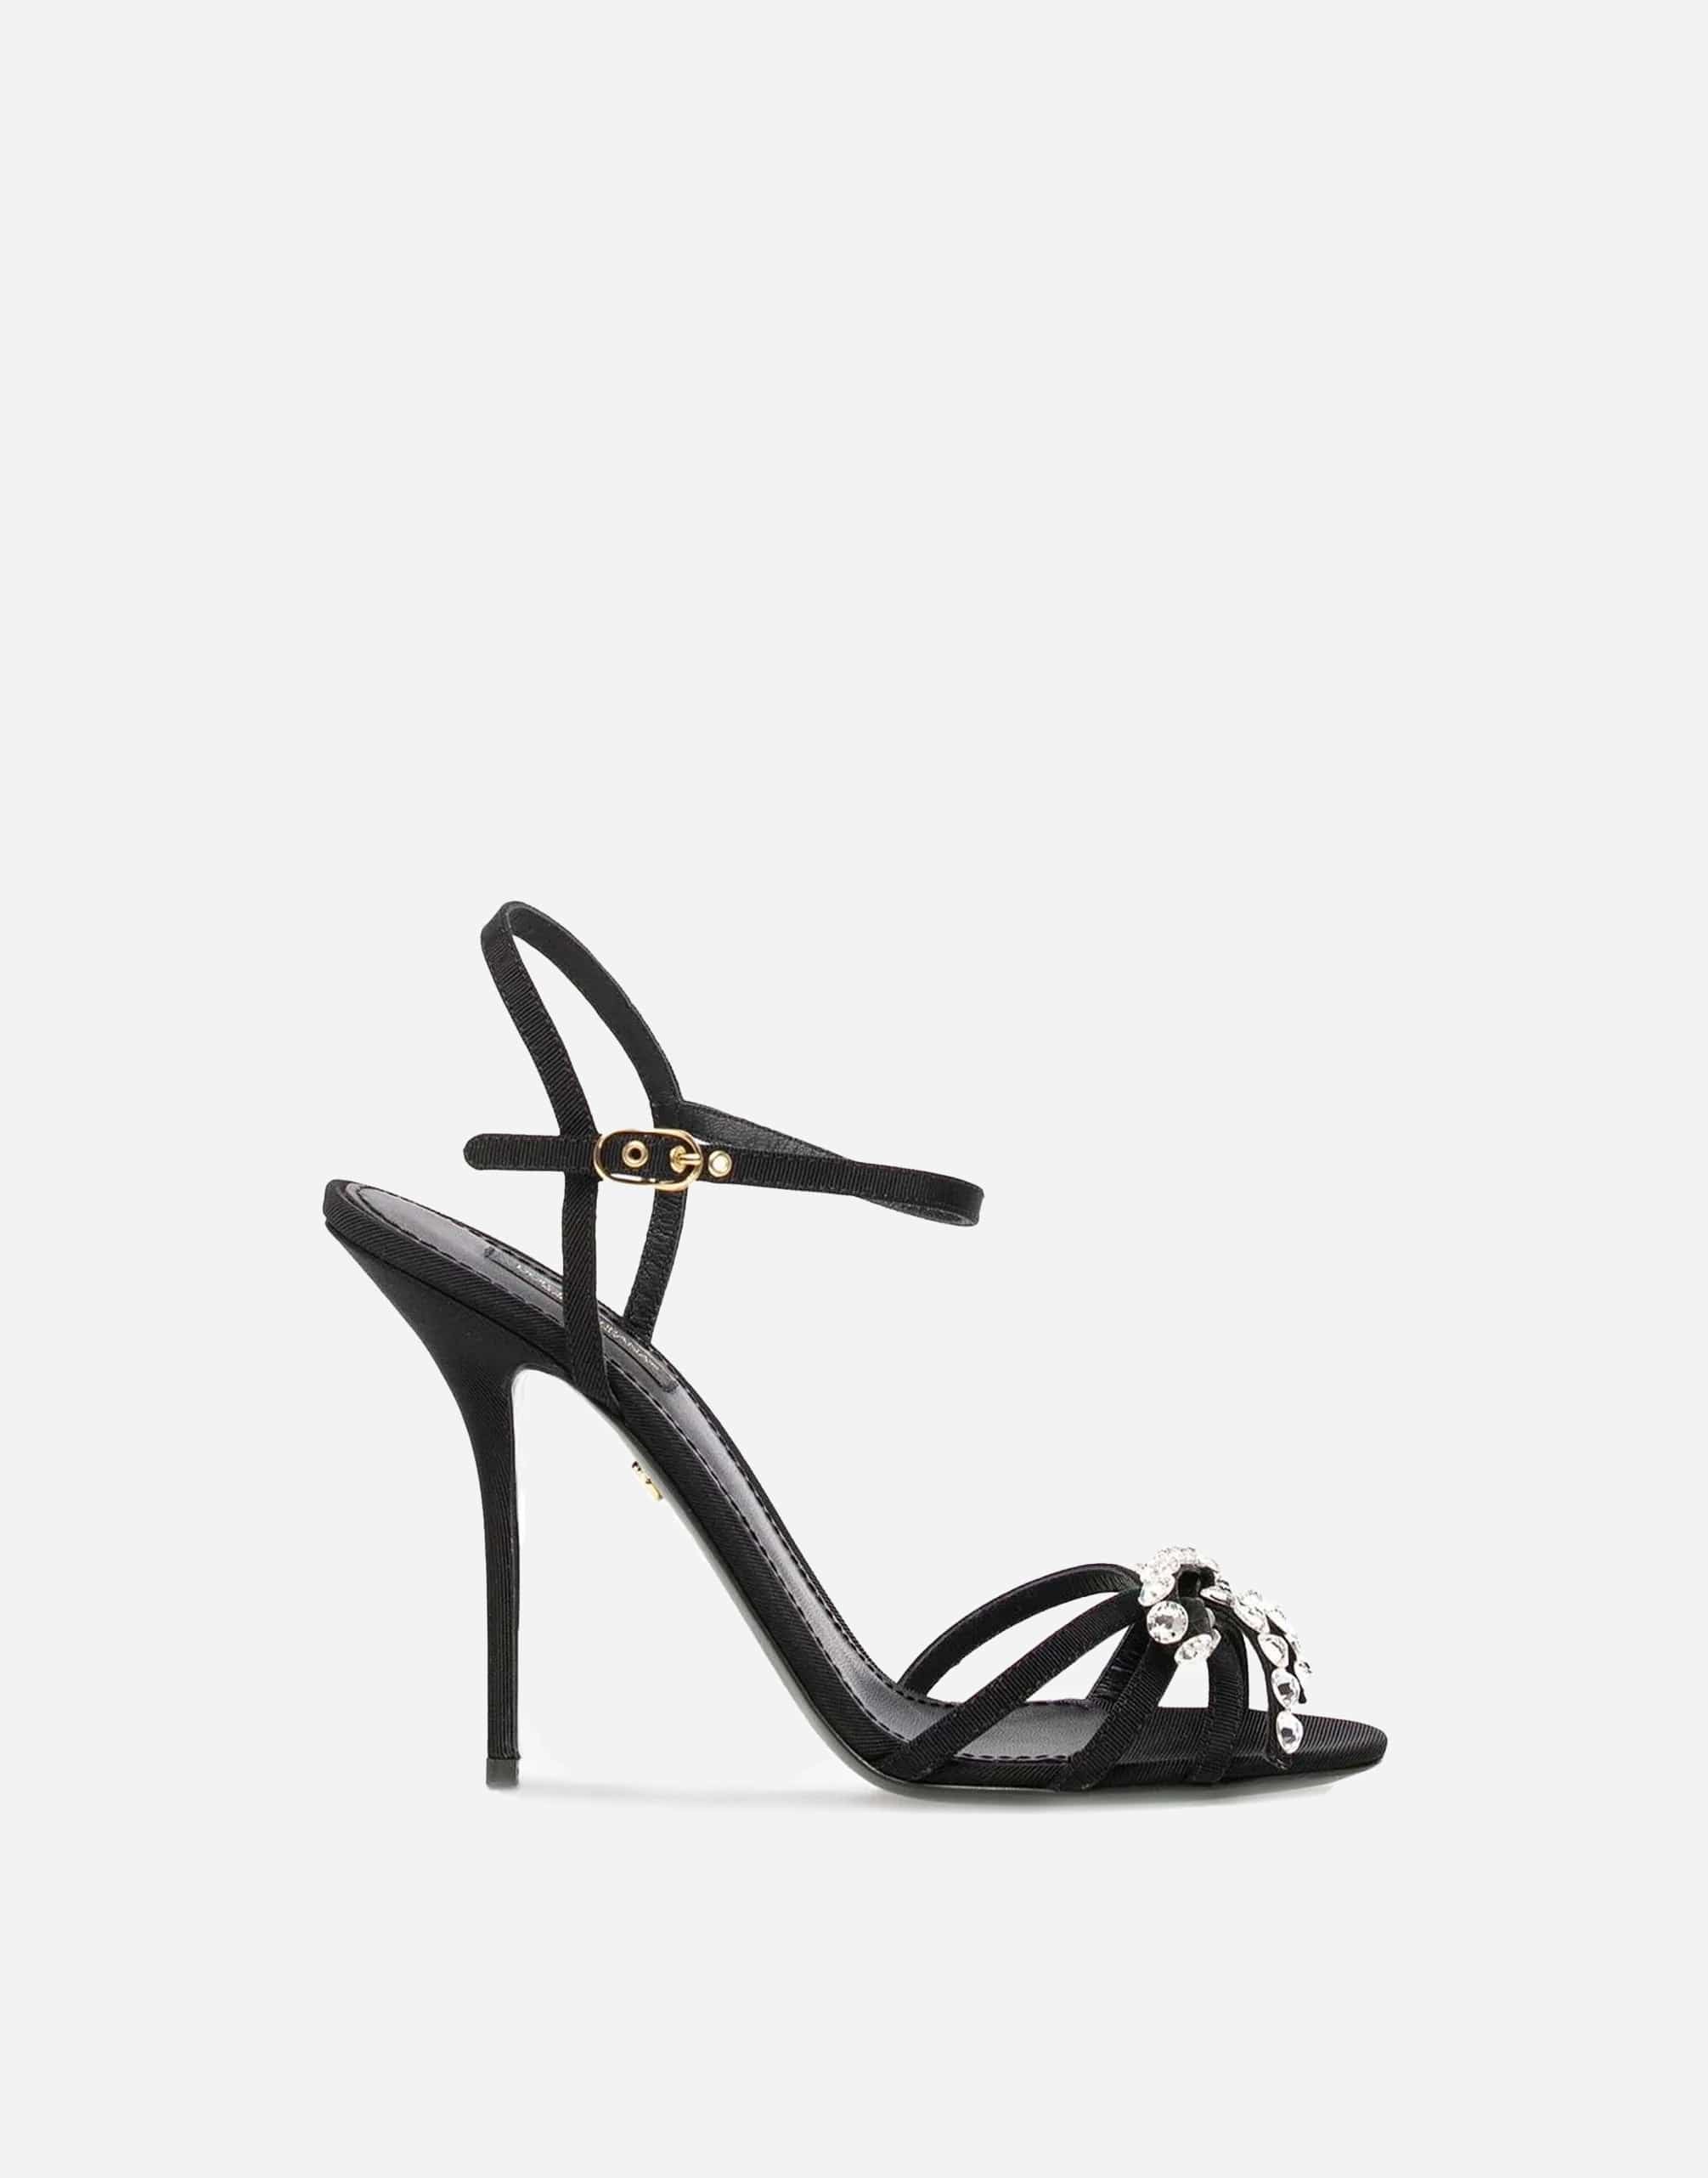 Dolce & Gabbana 105 Crystal Bow Sandals